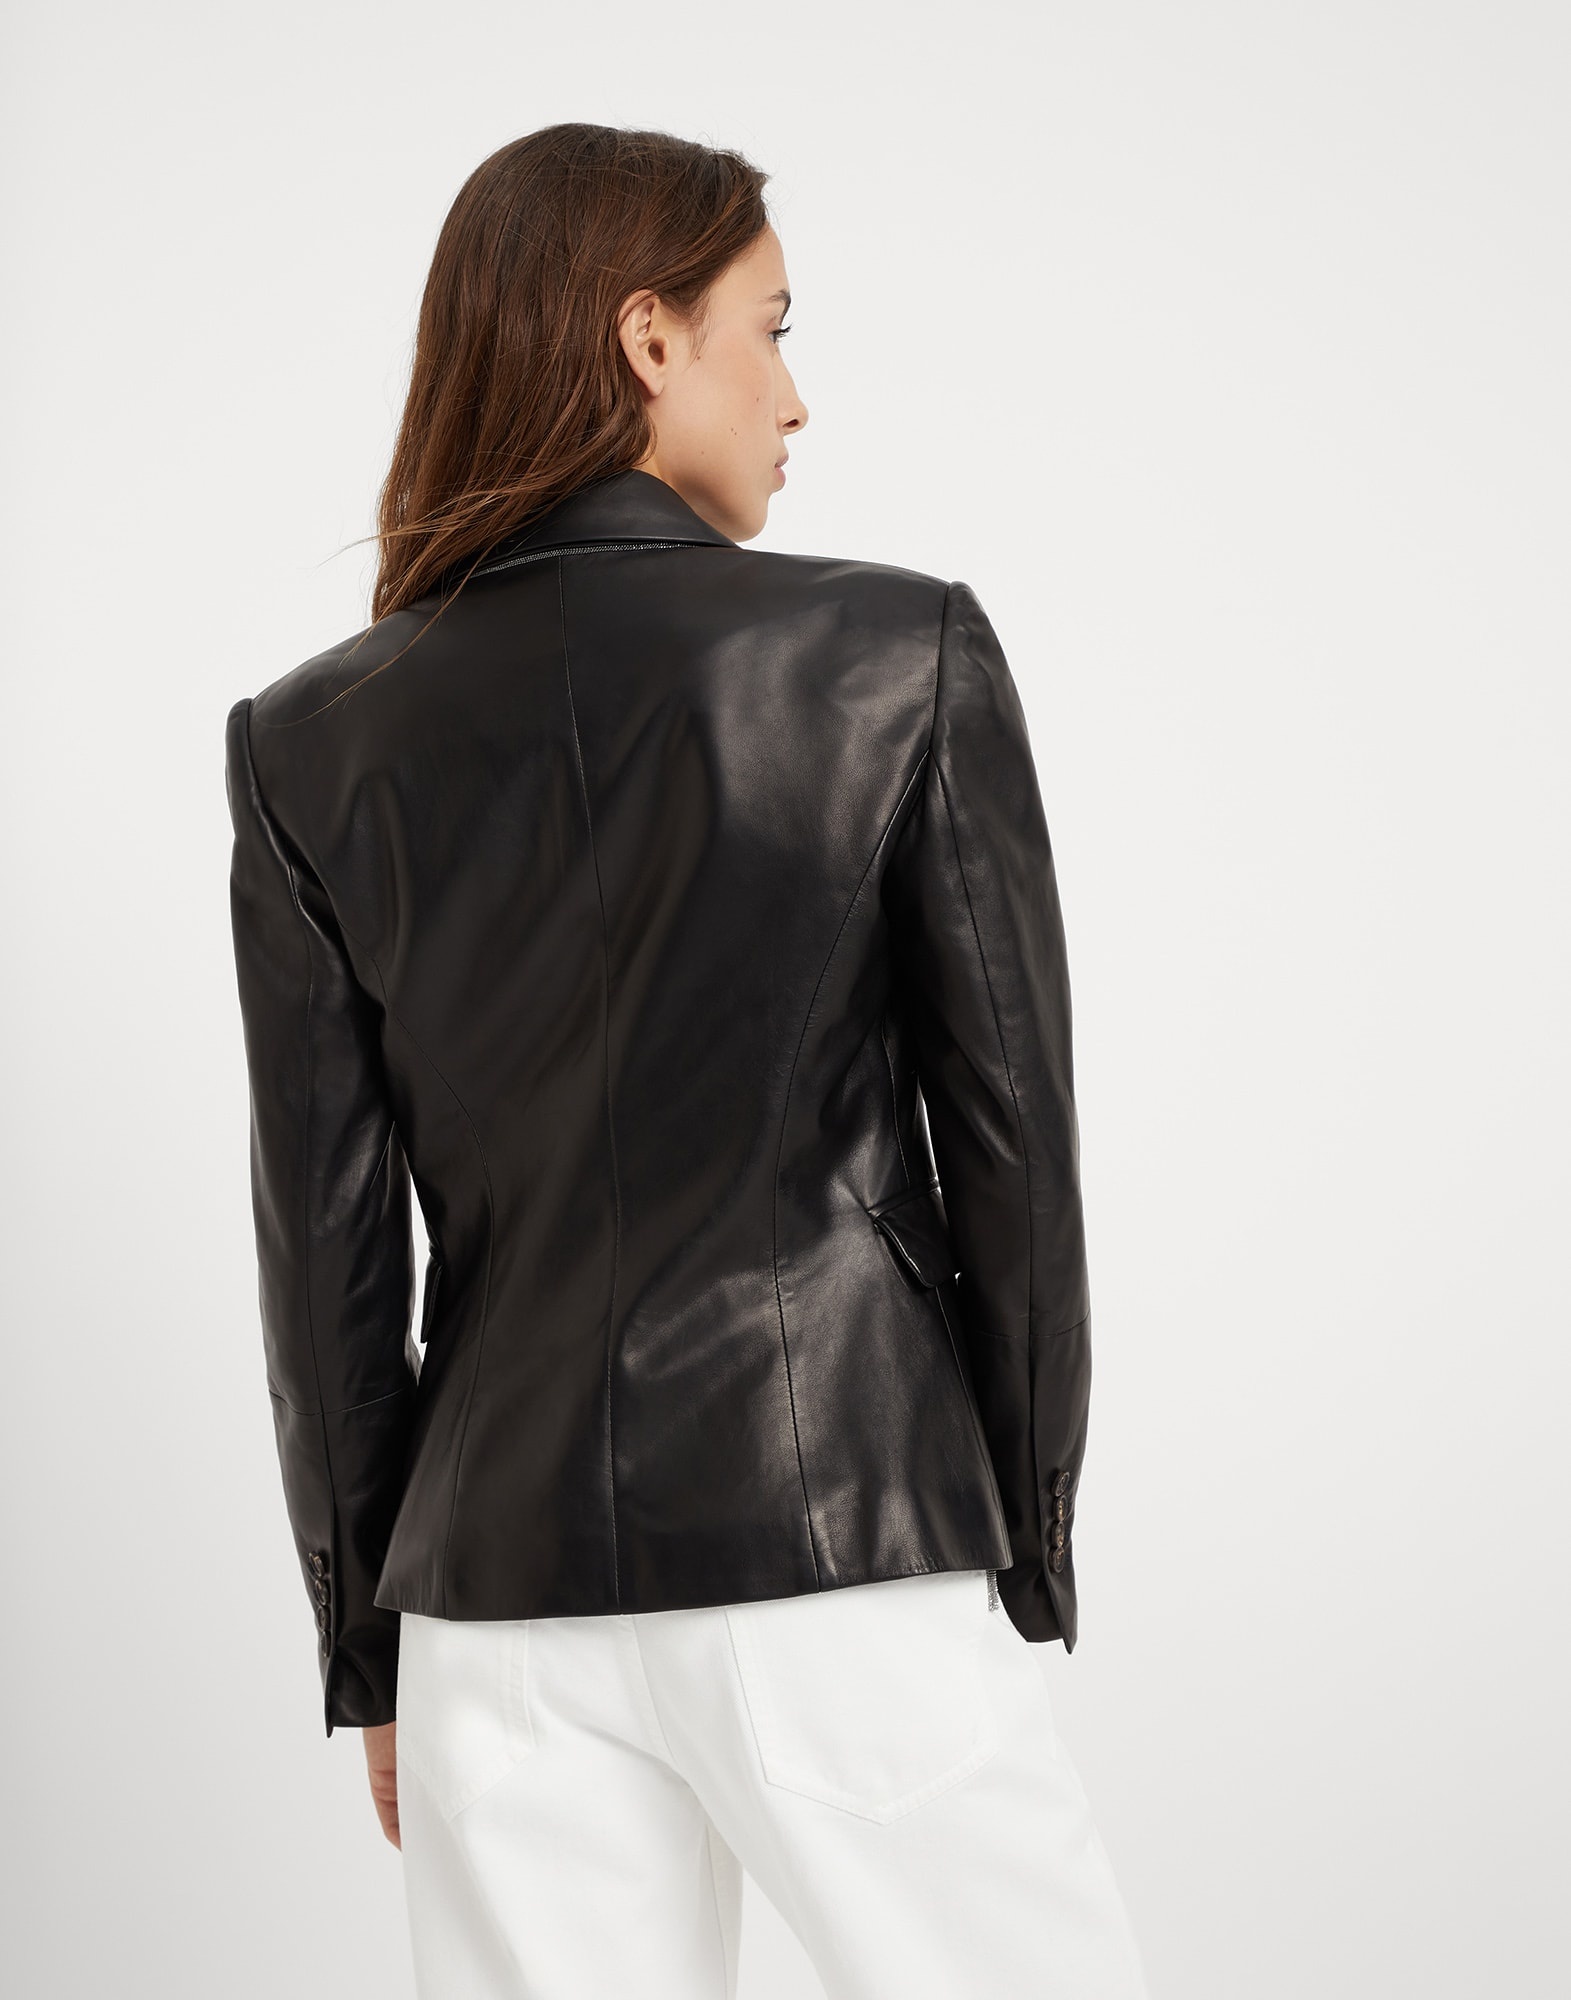 Nappa leather jacket with monili - 2